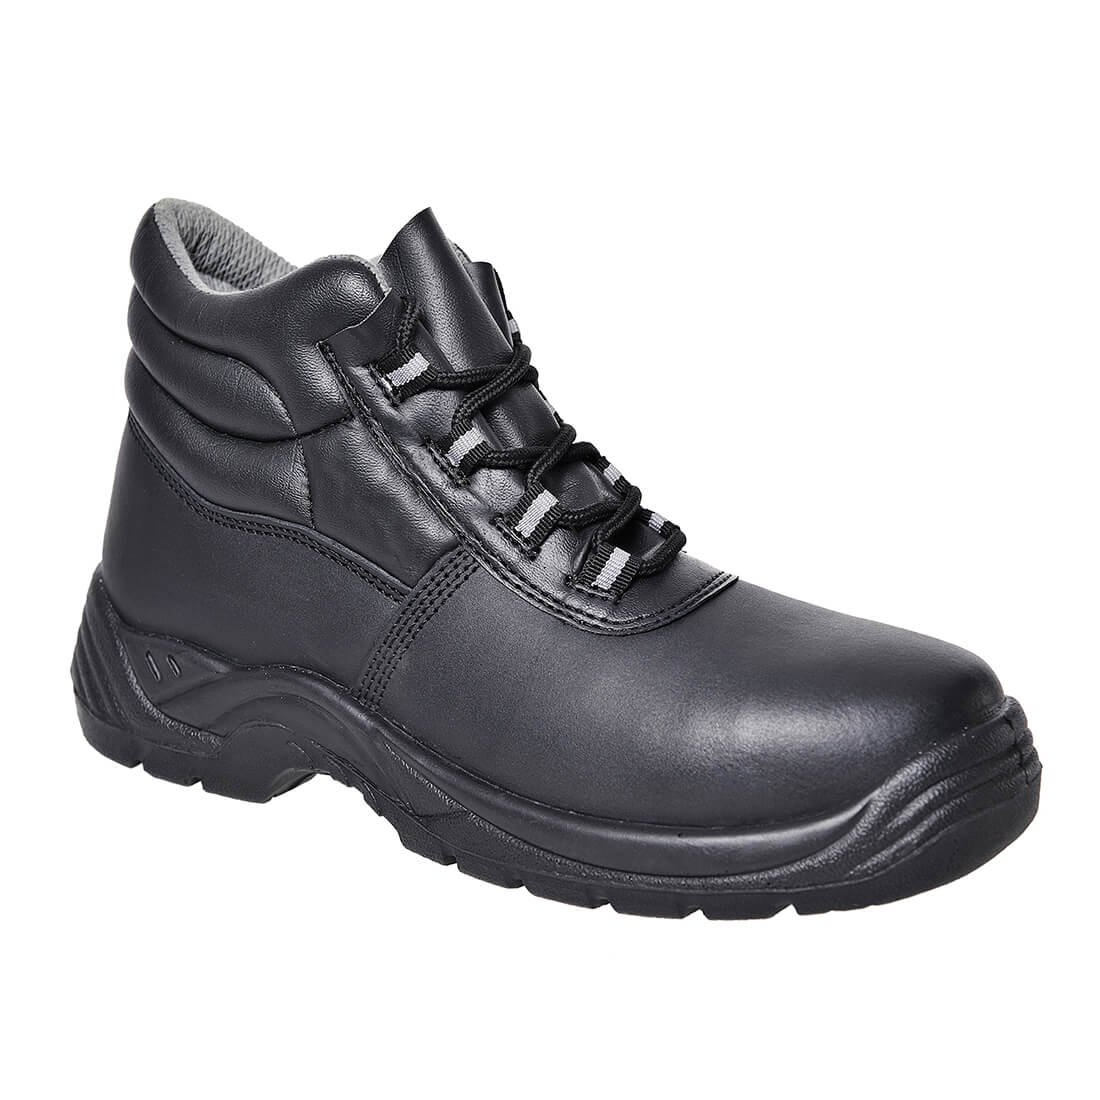 Portwest Compositelite S1P Metal Free Safety Boots Black Size 3